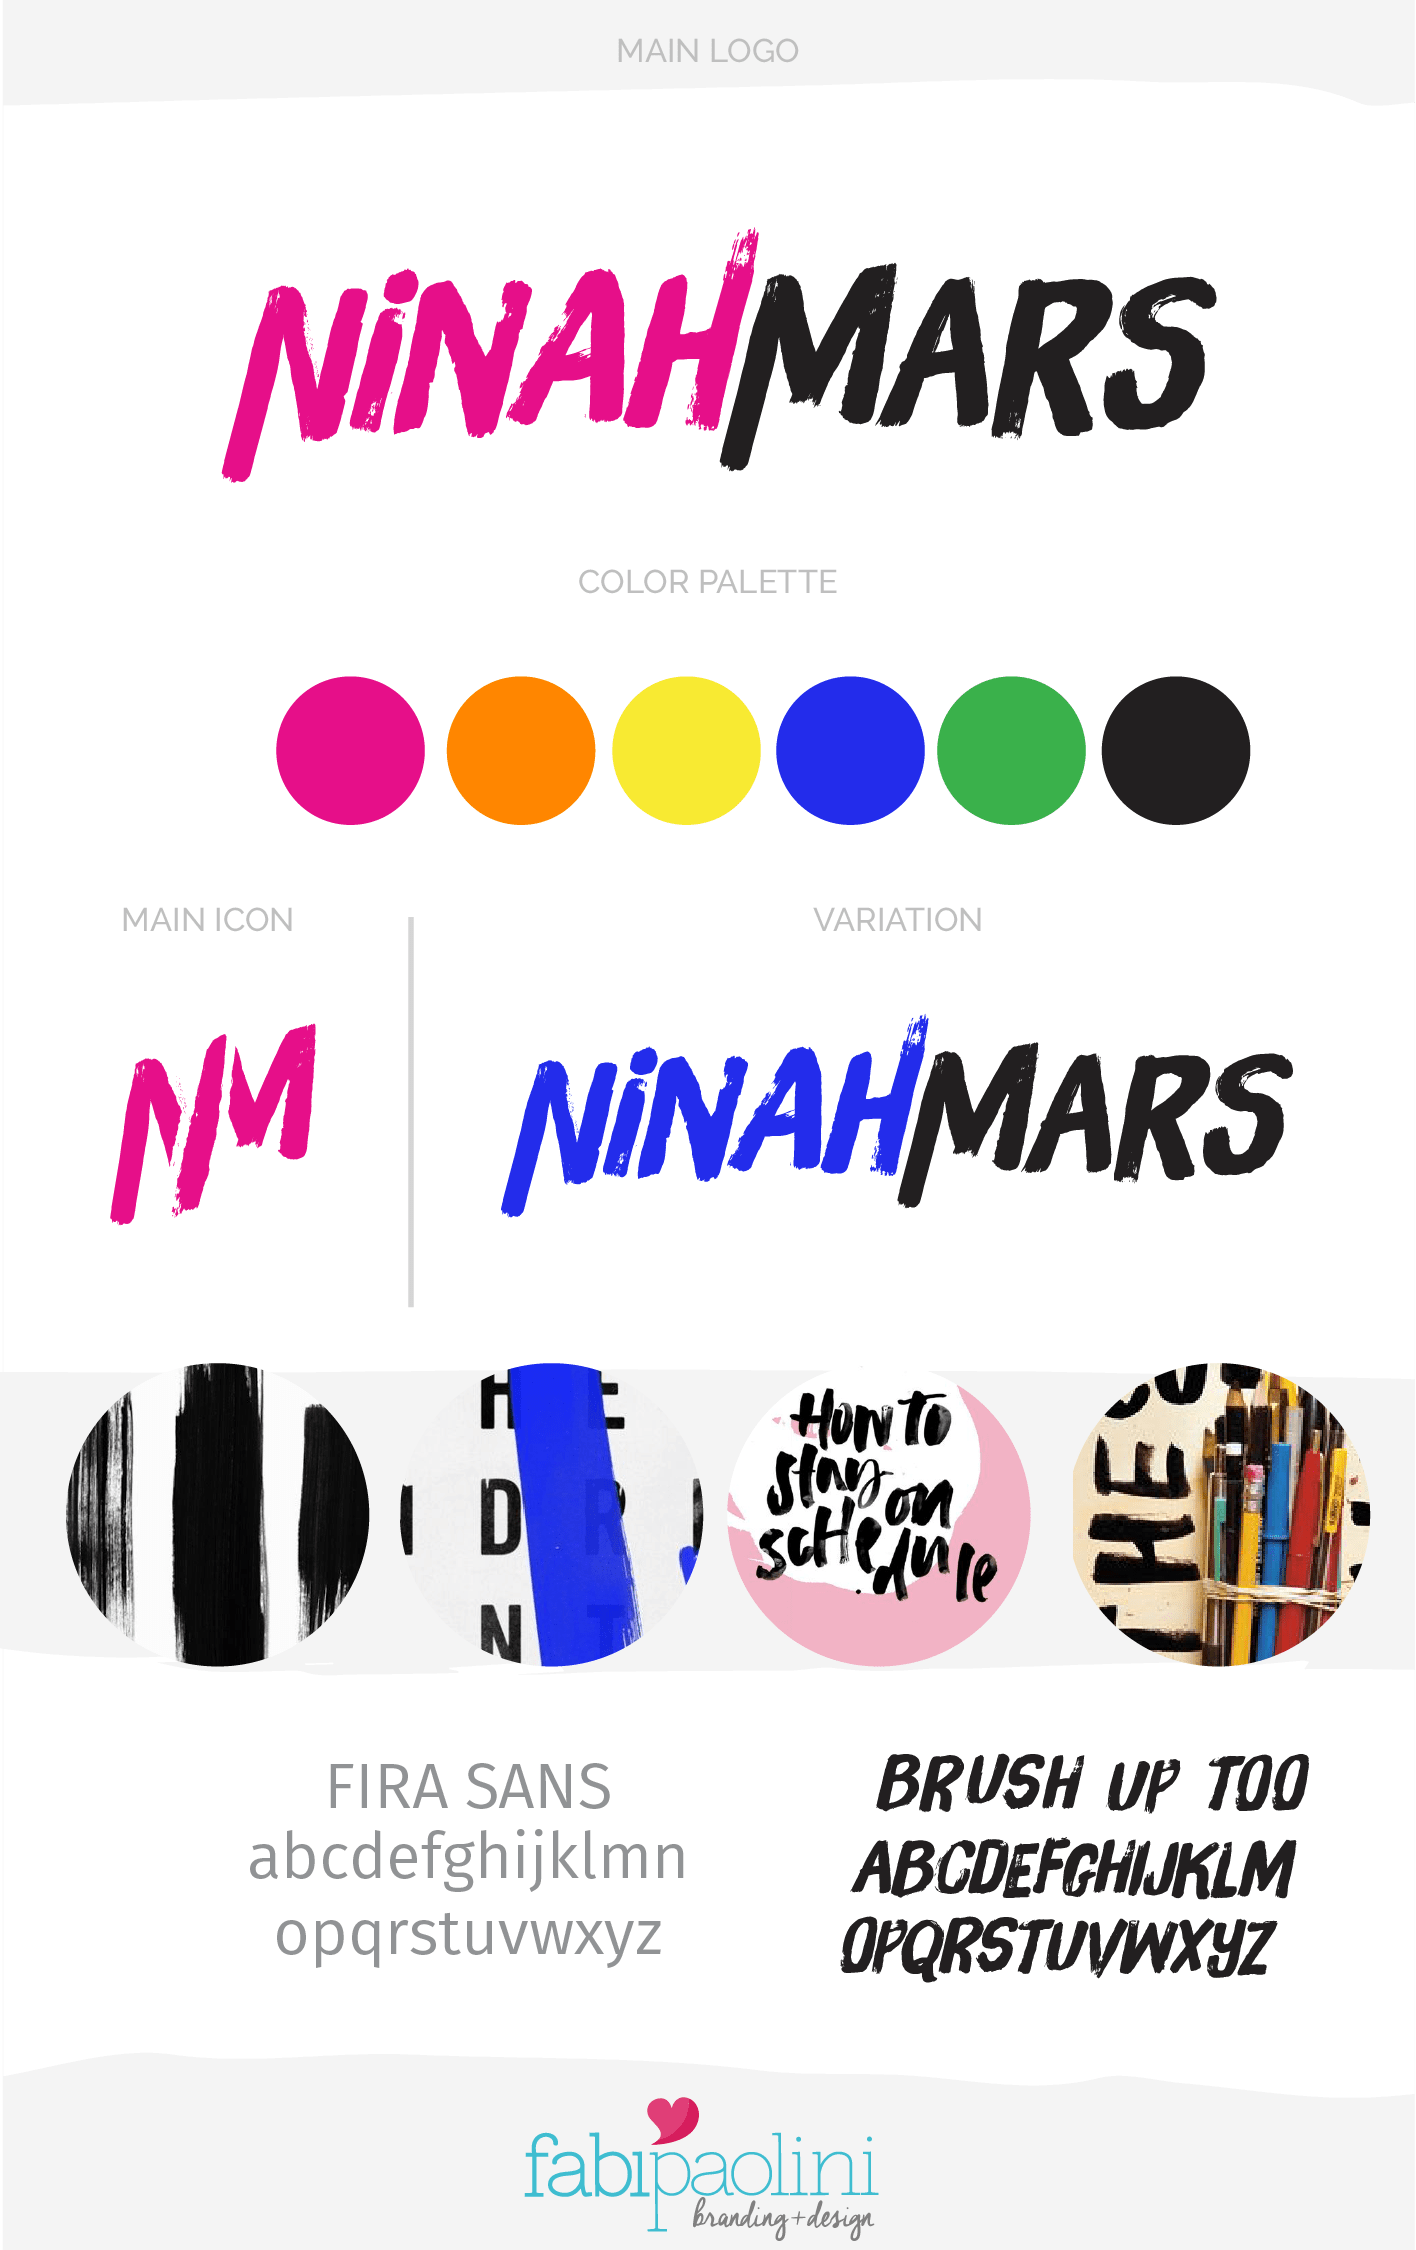 Ninah Mars Brand Board Branding + Logo + Web Design Fabi Paolini